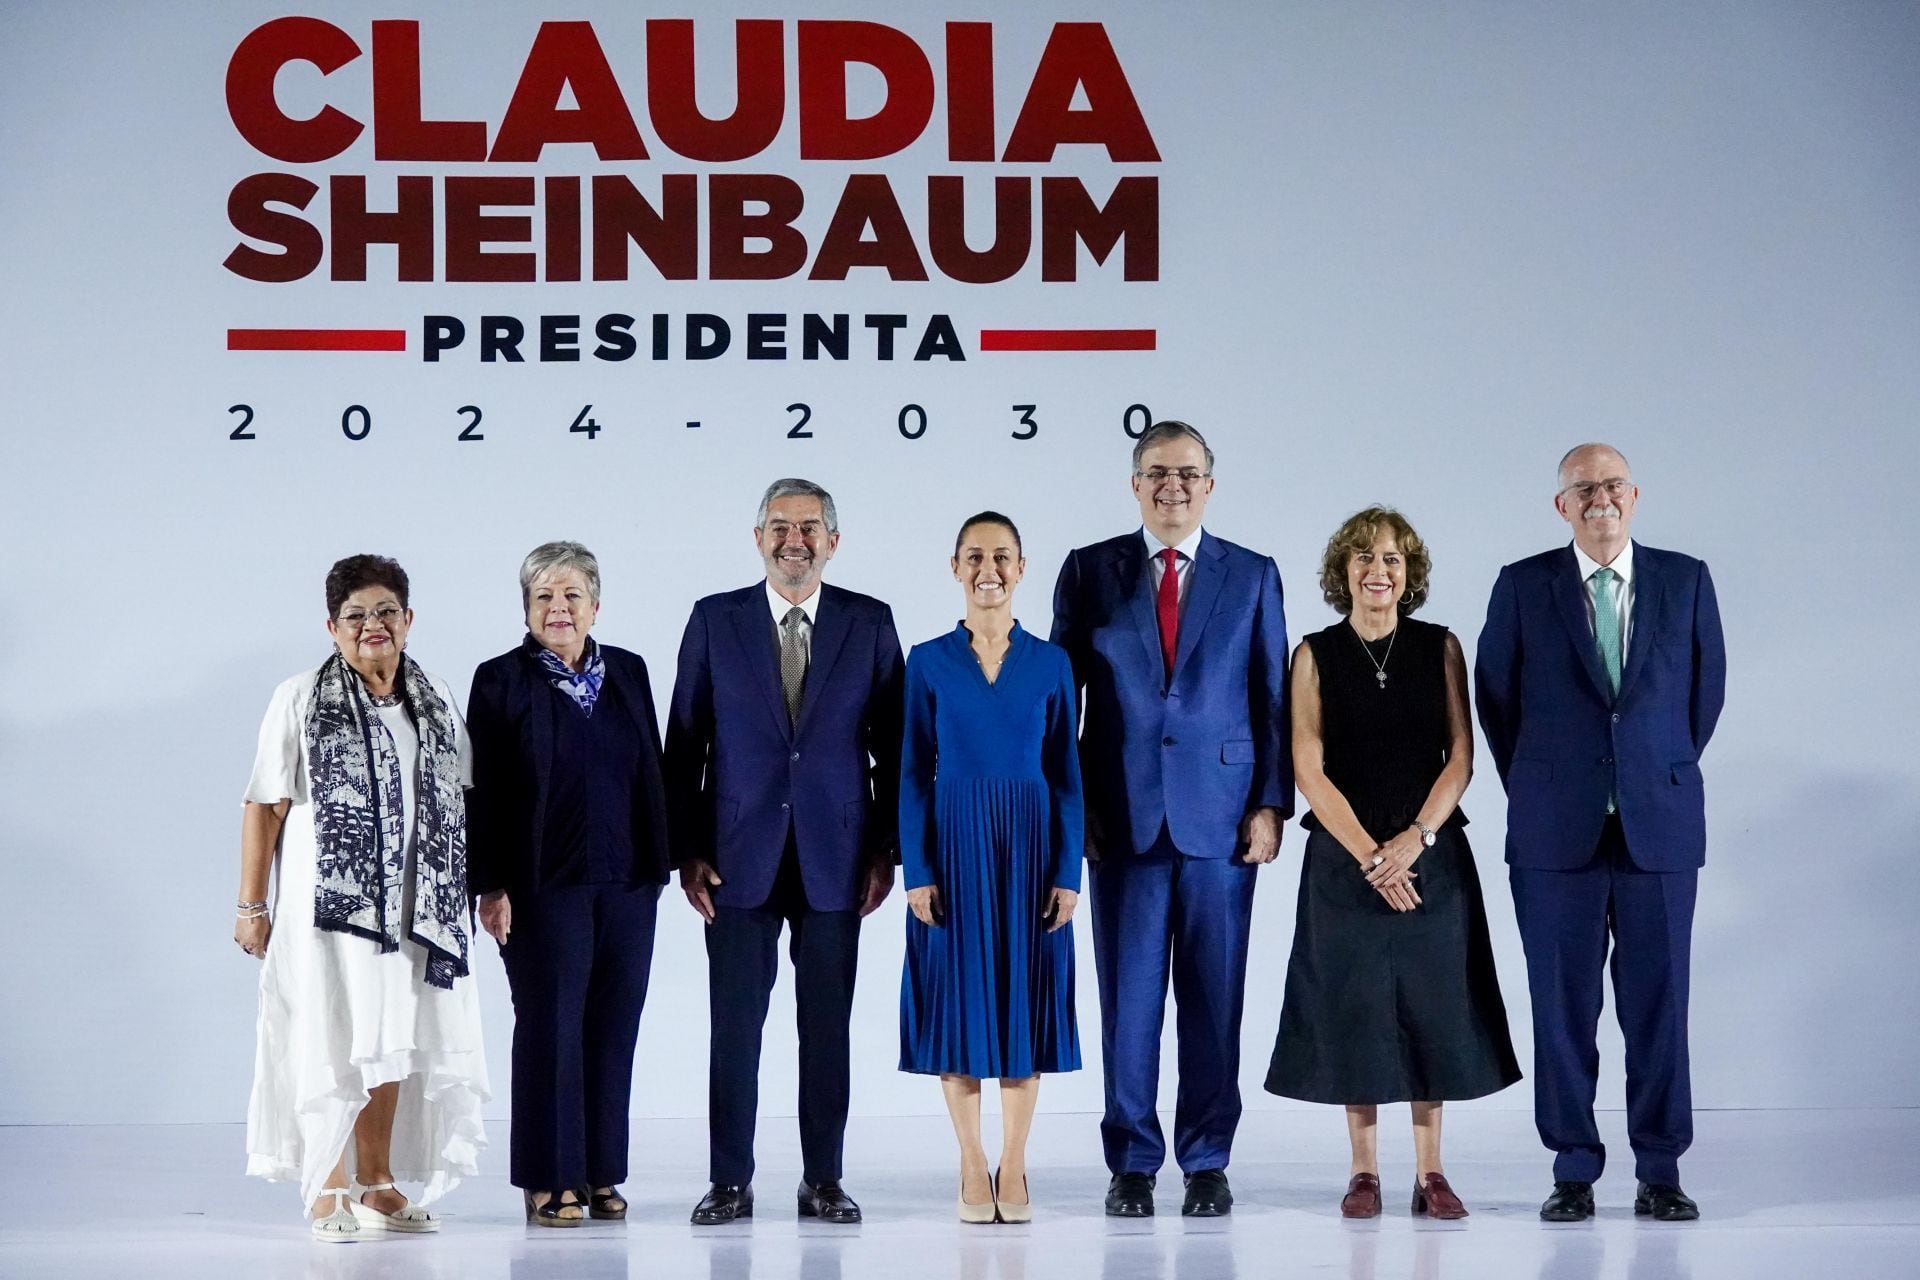 Claudia Sheinbaum, futura presidenta de México, posa con integrantes del gabinete presidencial.
FOTO: GALO CAÑAS/CUARTOSCURO.COM